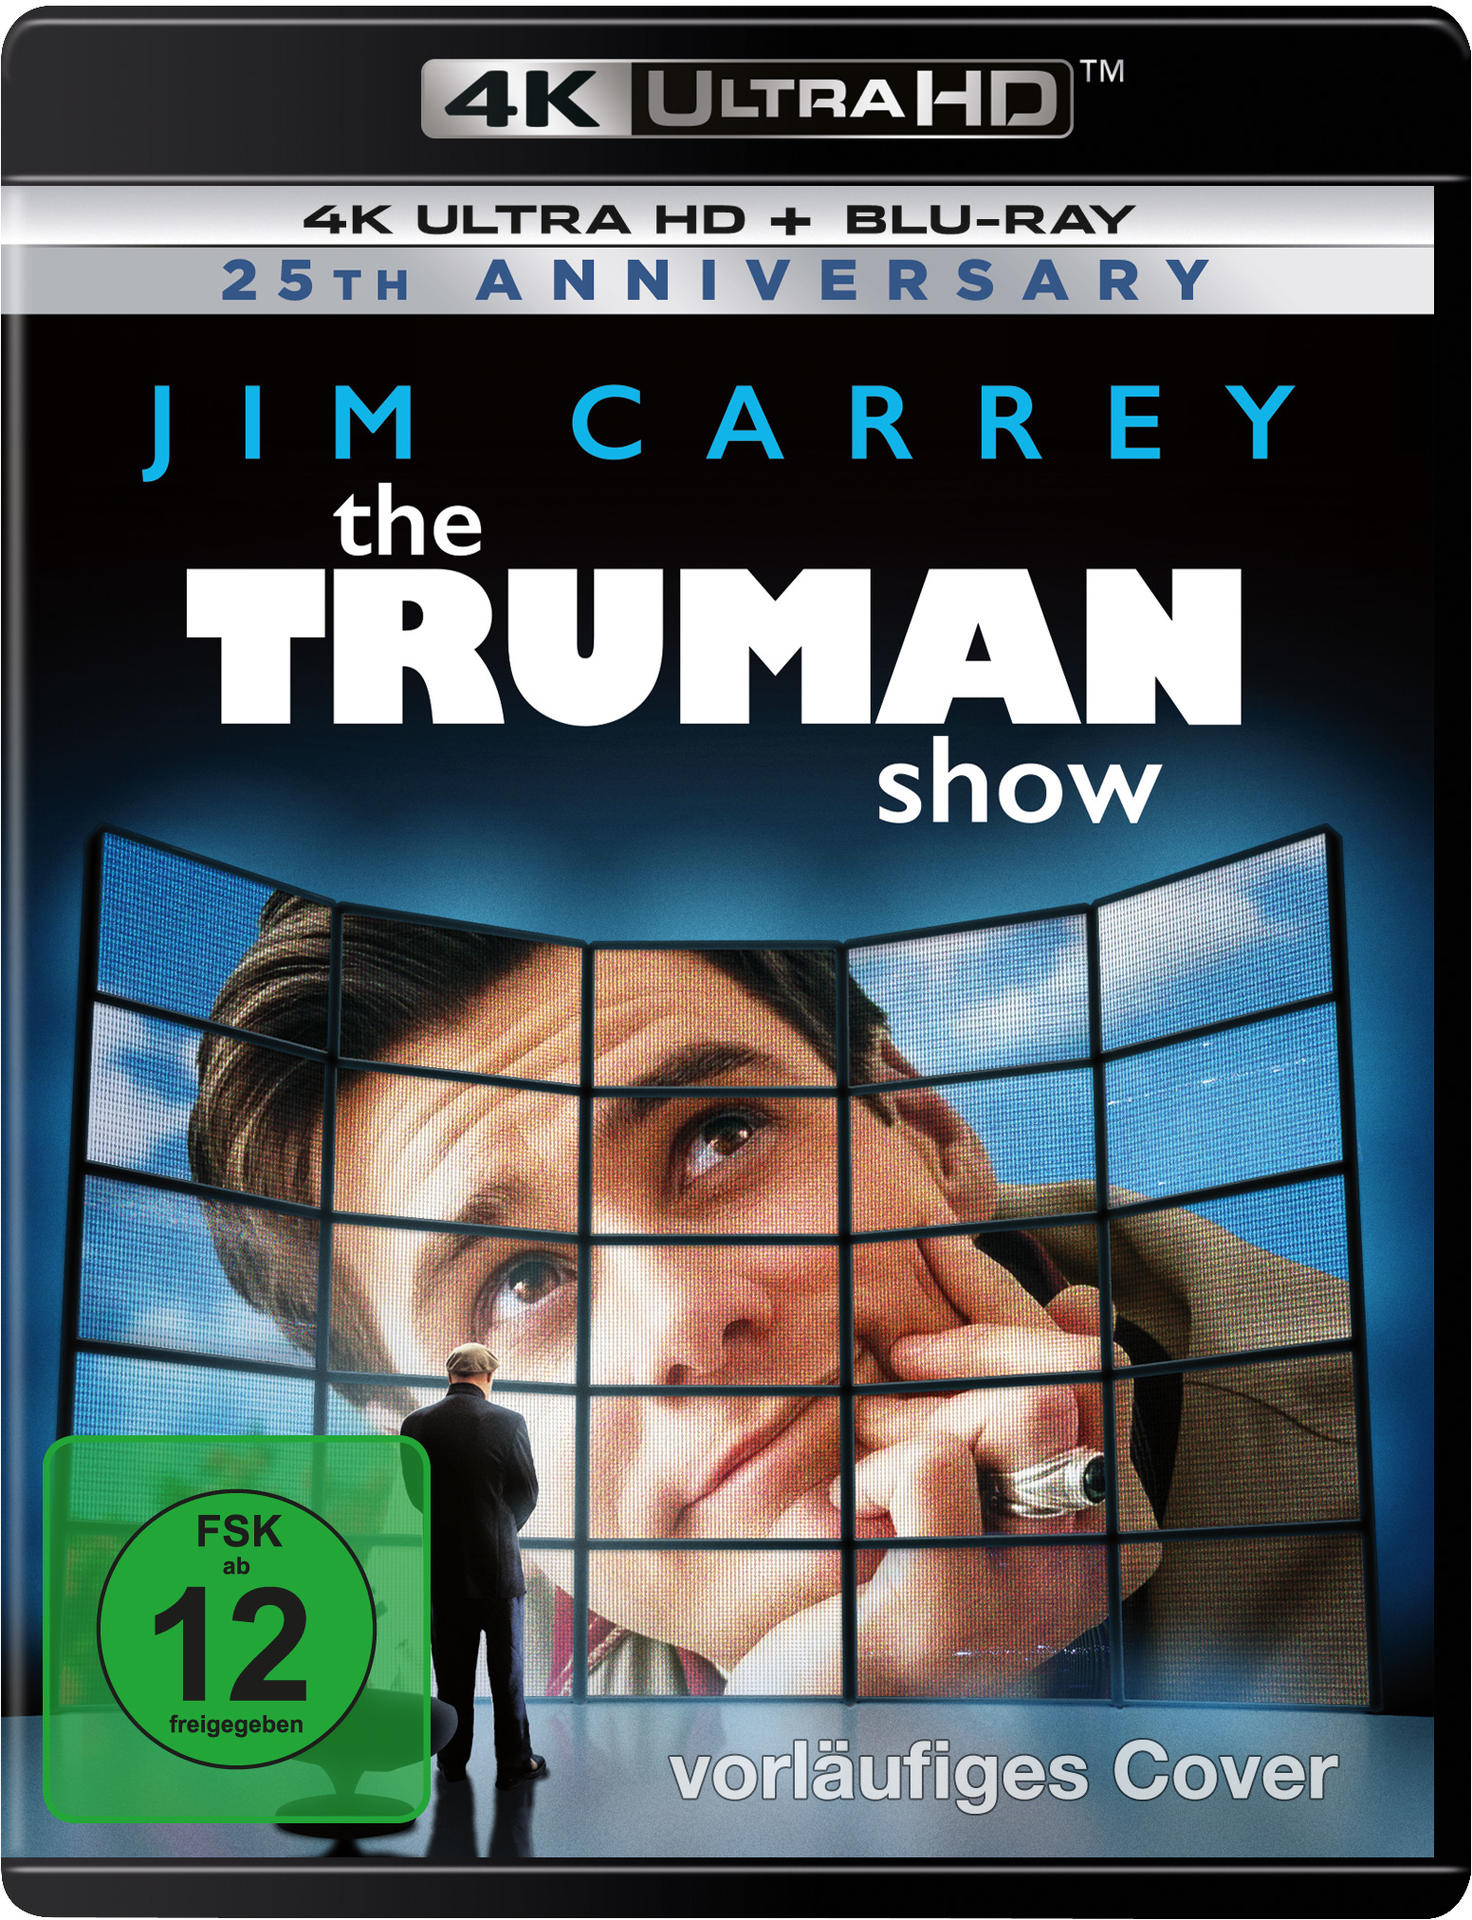 Truman HD Show 4K Blu-ray + Ultra Die Blu-ray